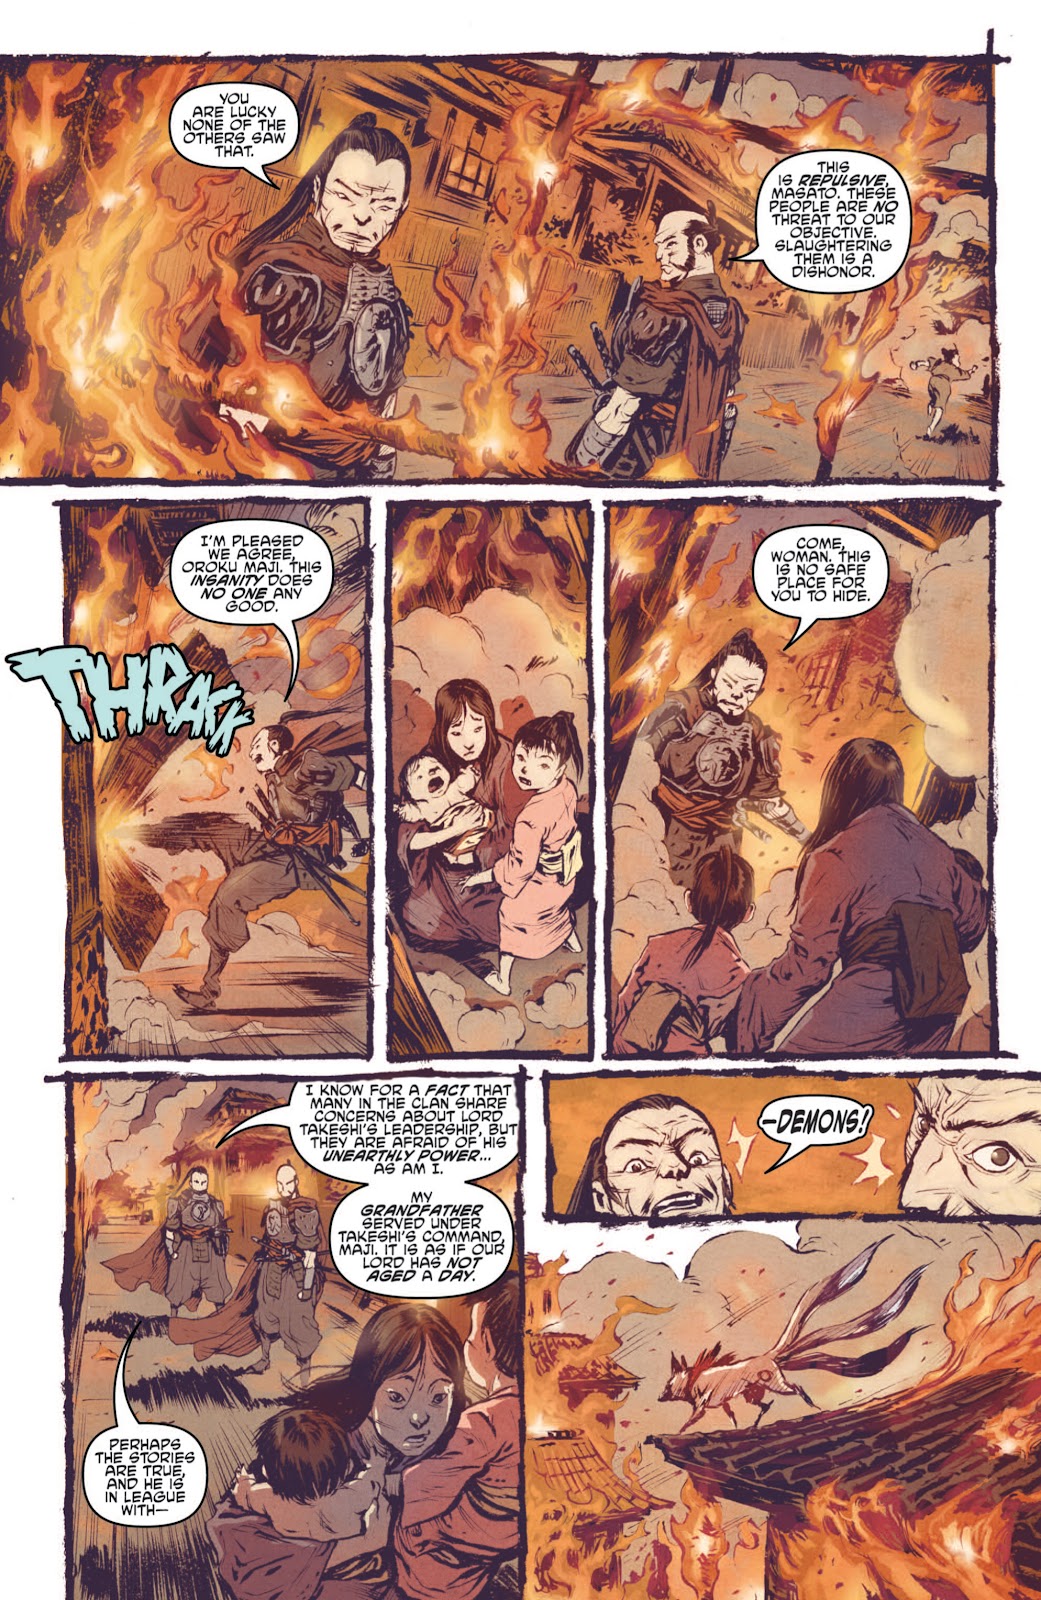 Teenage Mutant Ninja Turtles: The Secret History of the Foot Clan issue 1 - Page 11